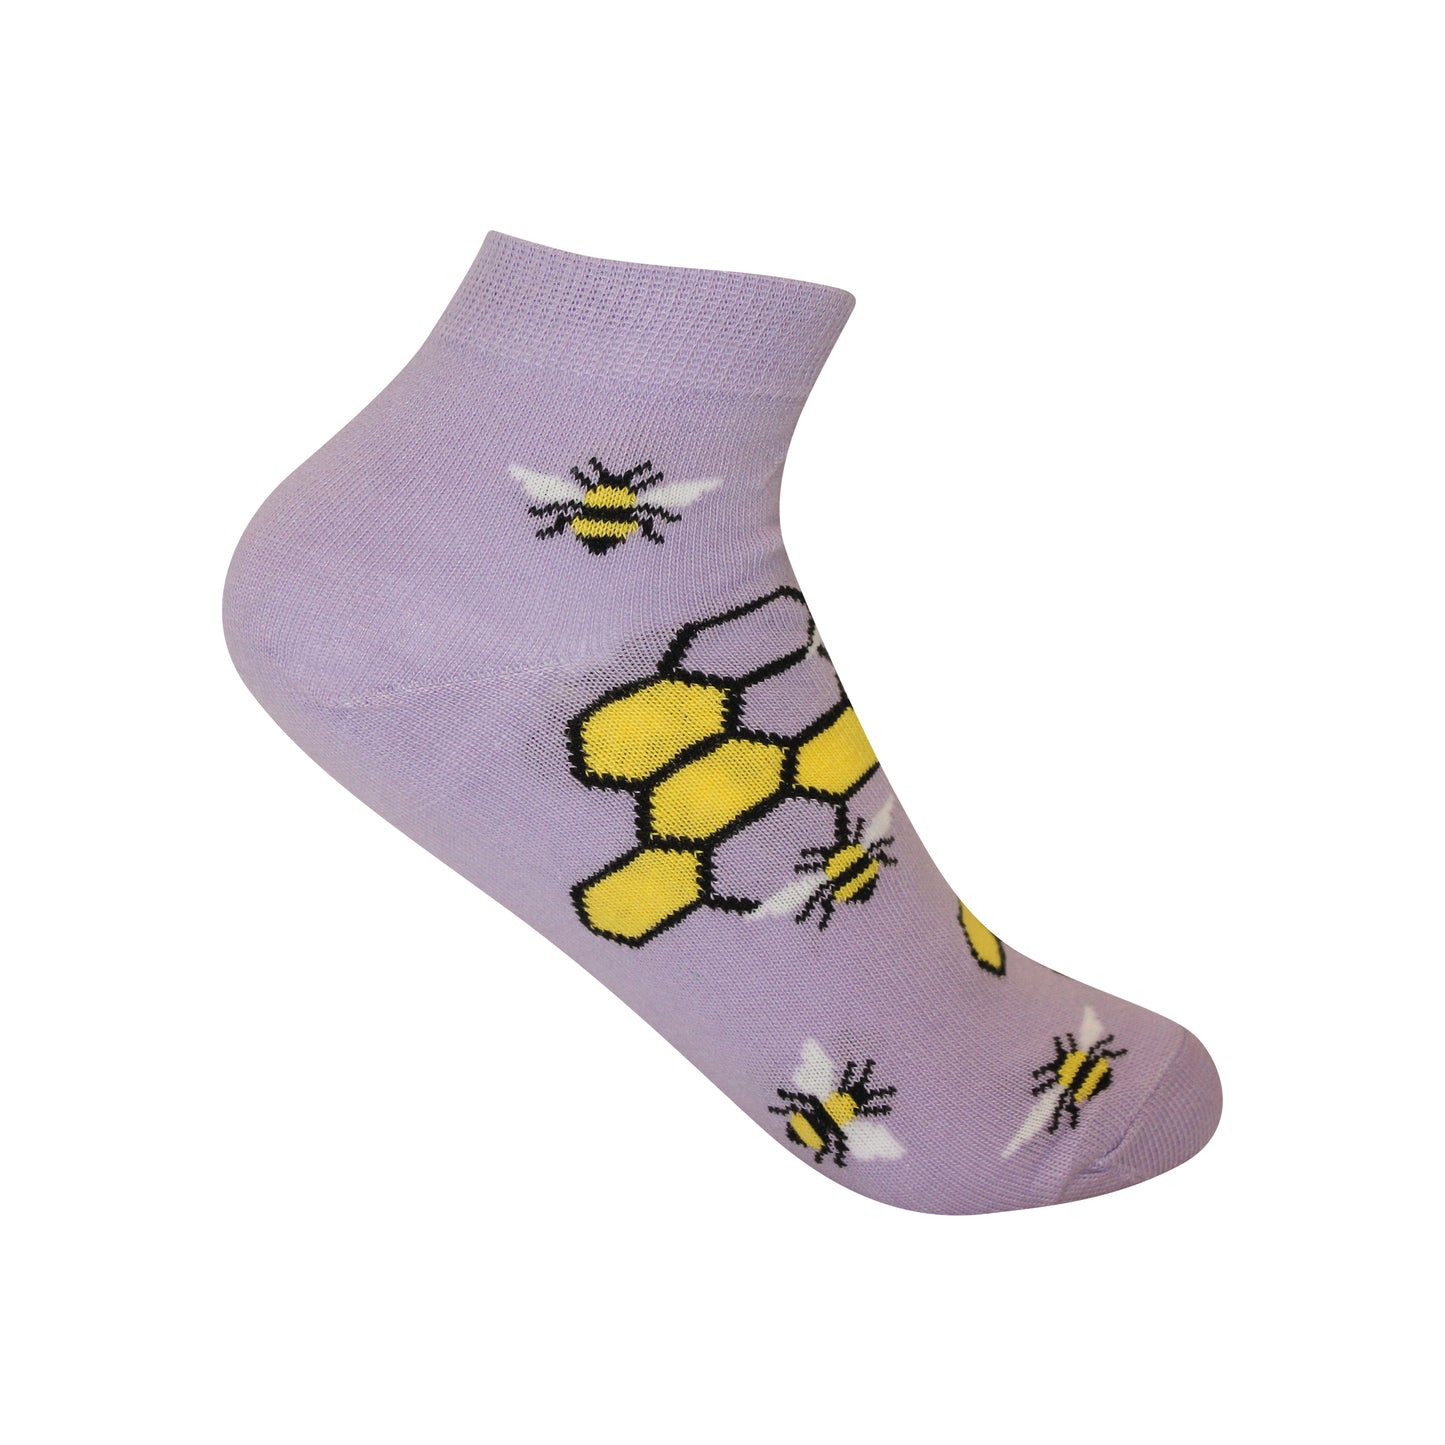 Buzzing Beehive Striped Socks Size UK 12 - 3